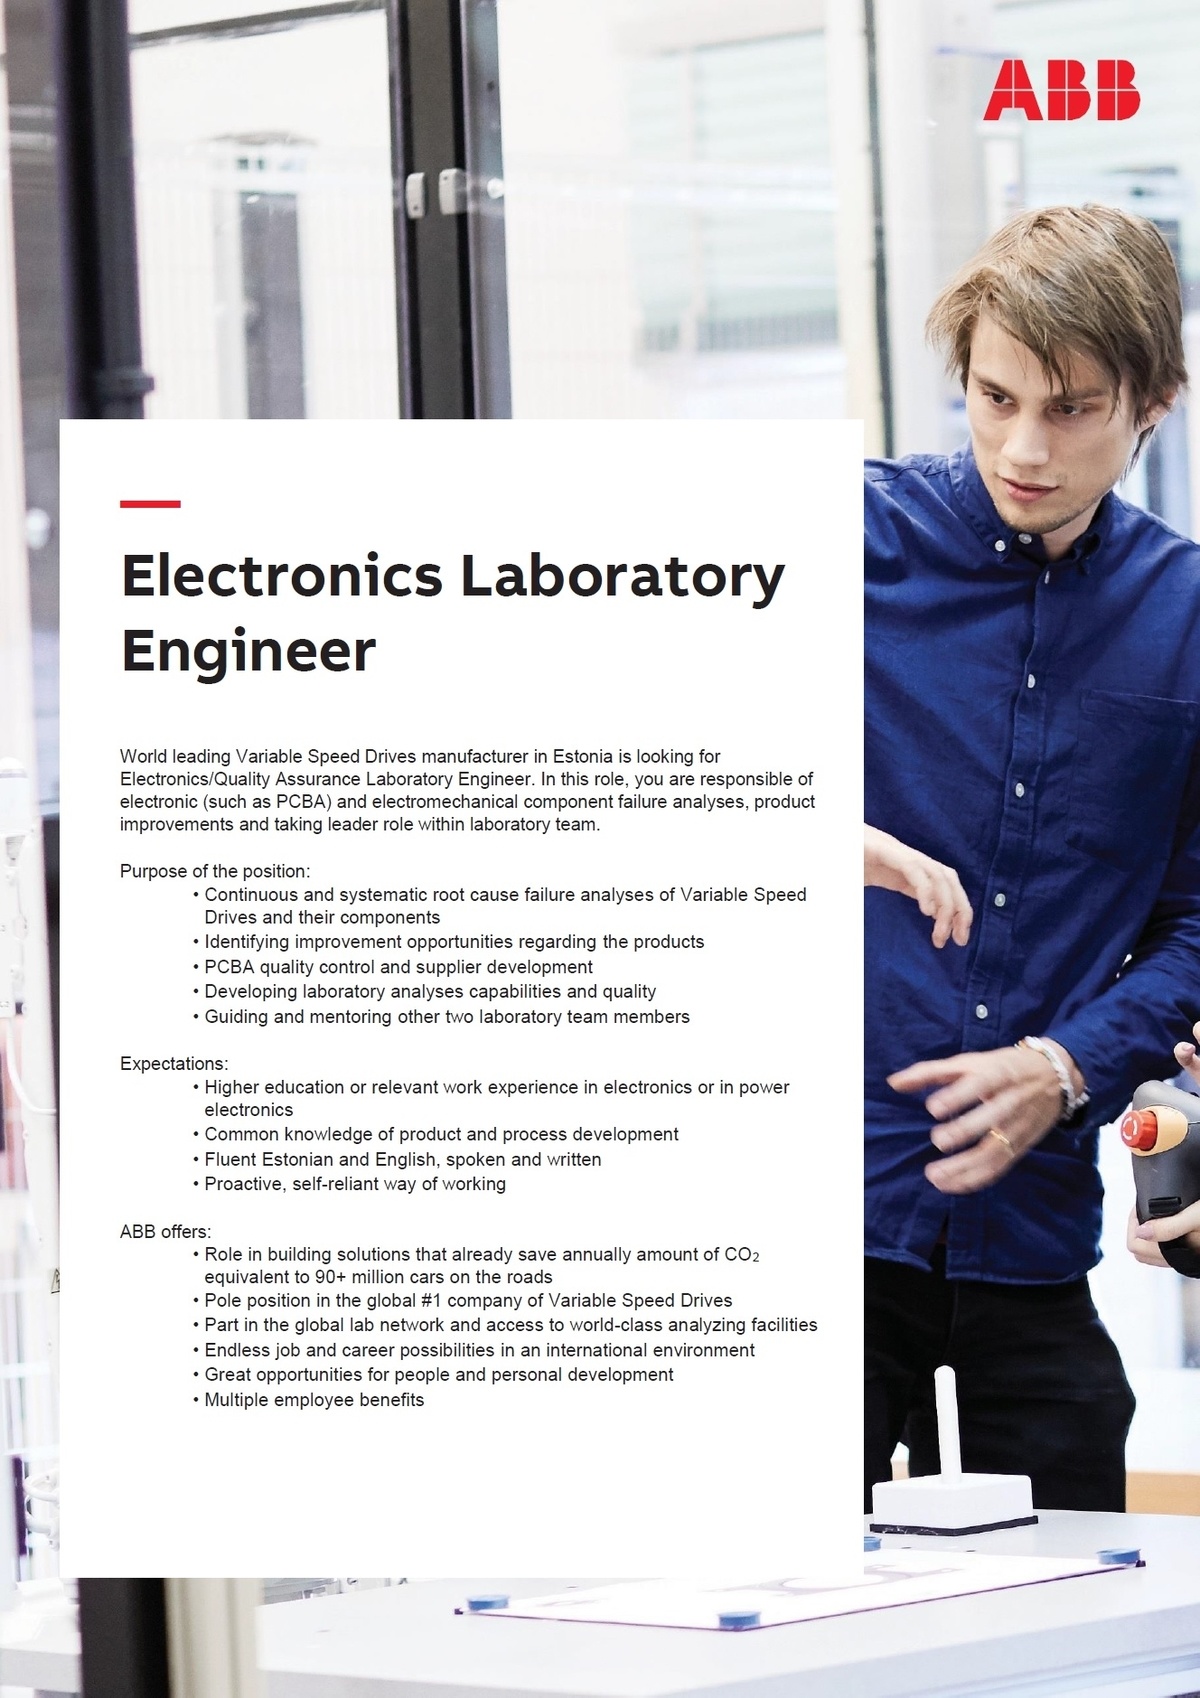 ABB AS Electronics Laboratory Engineer